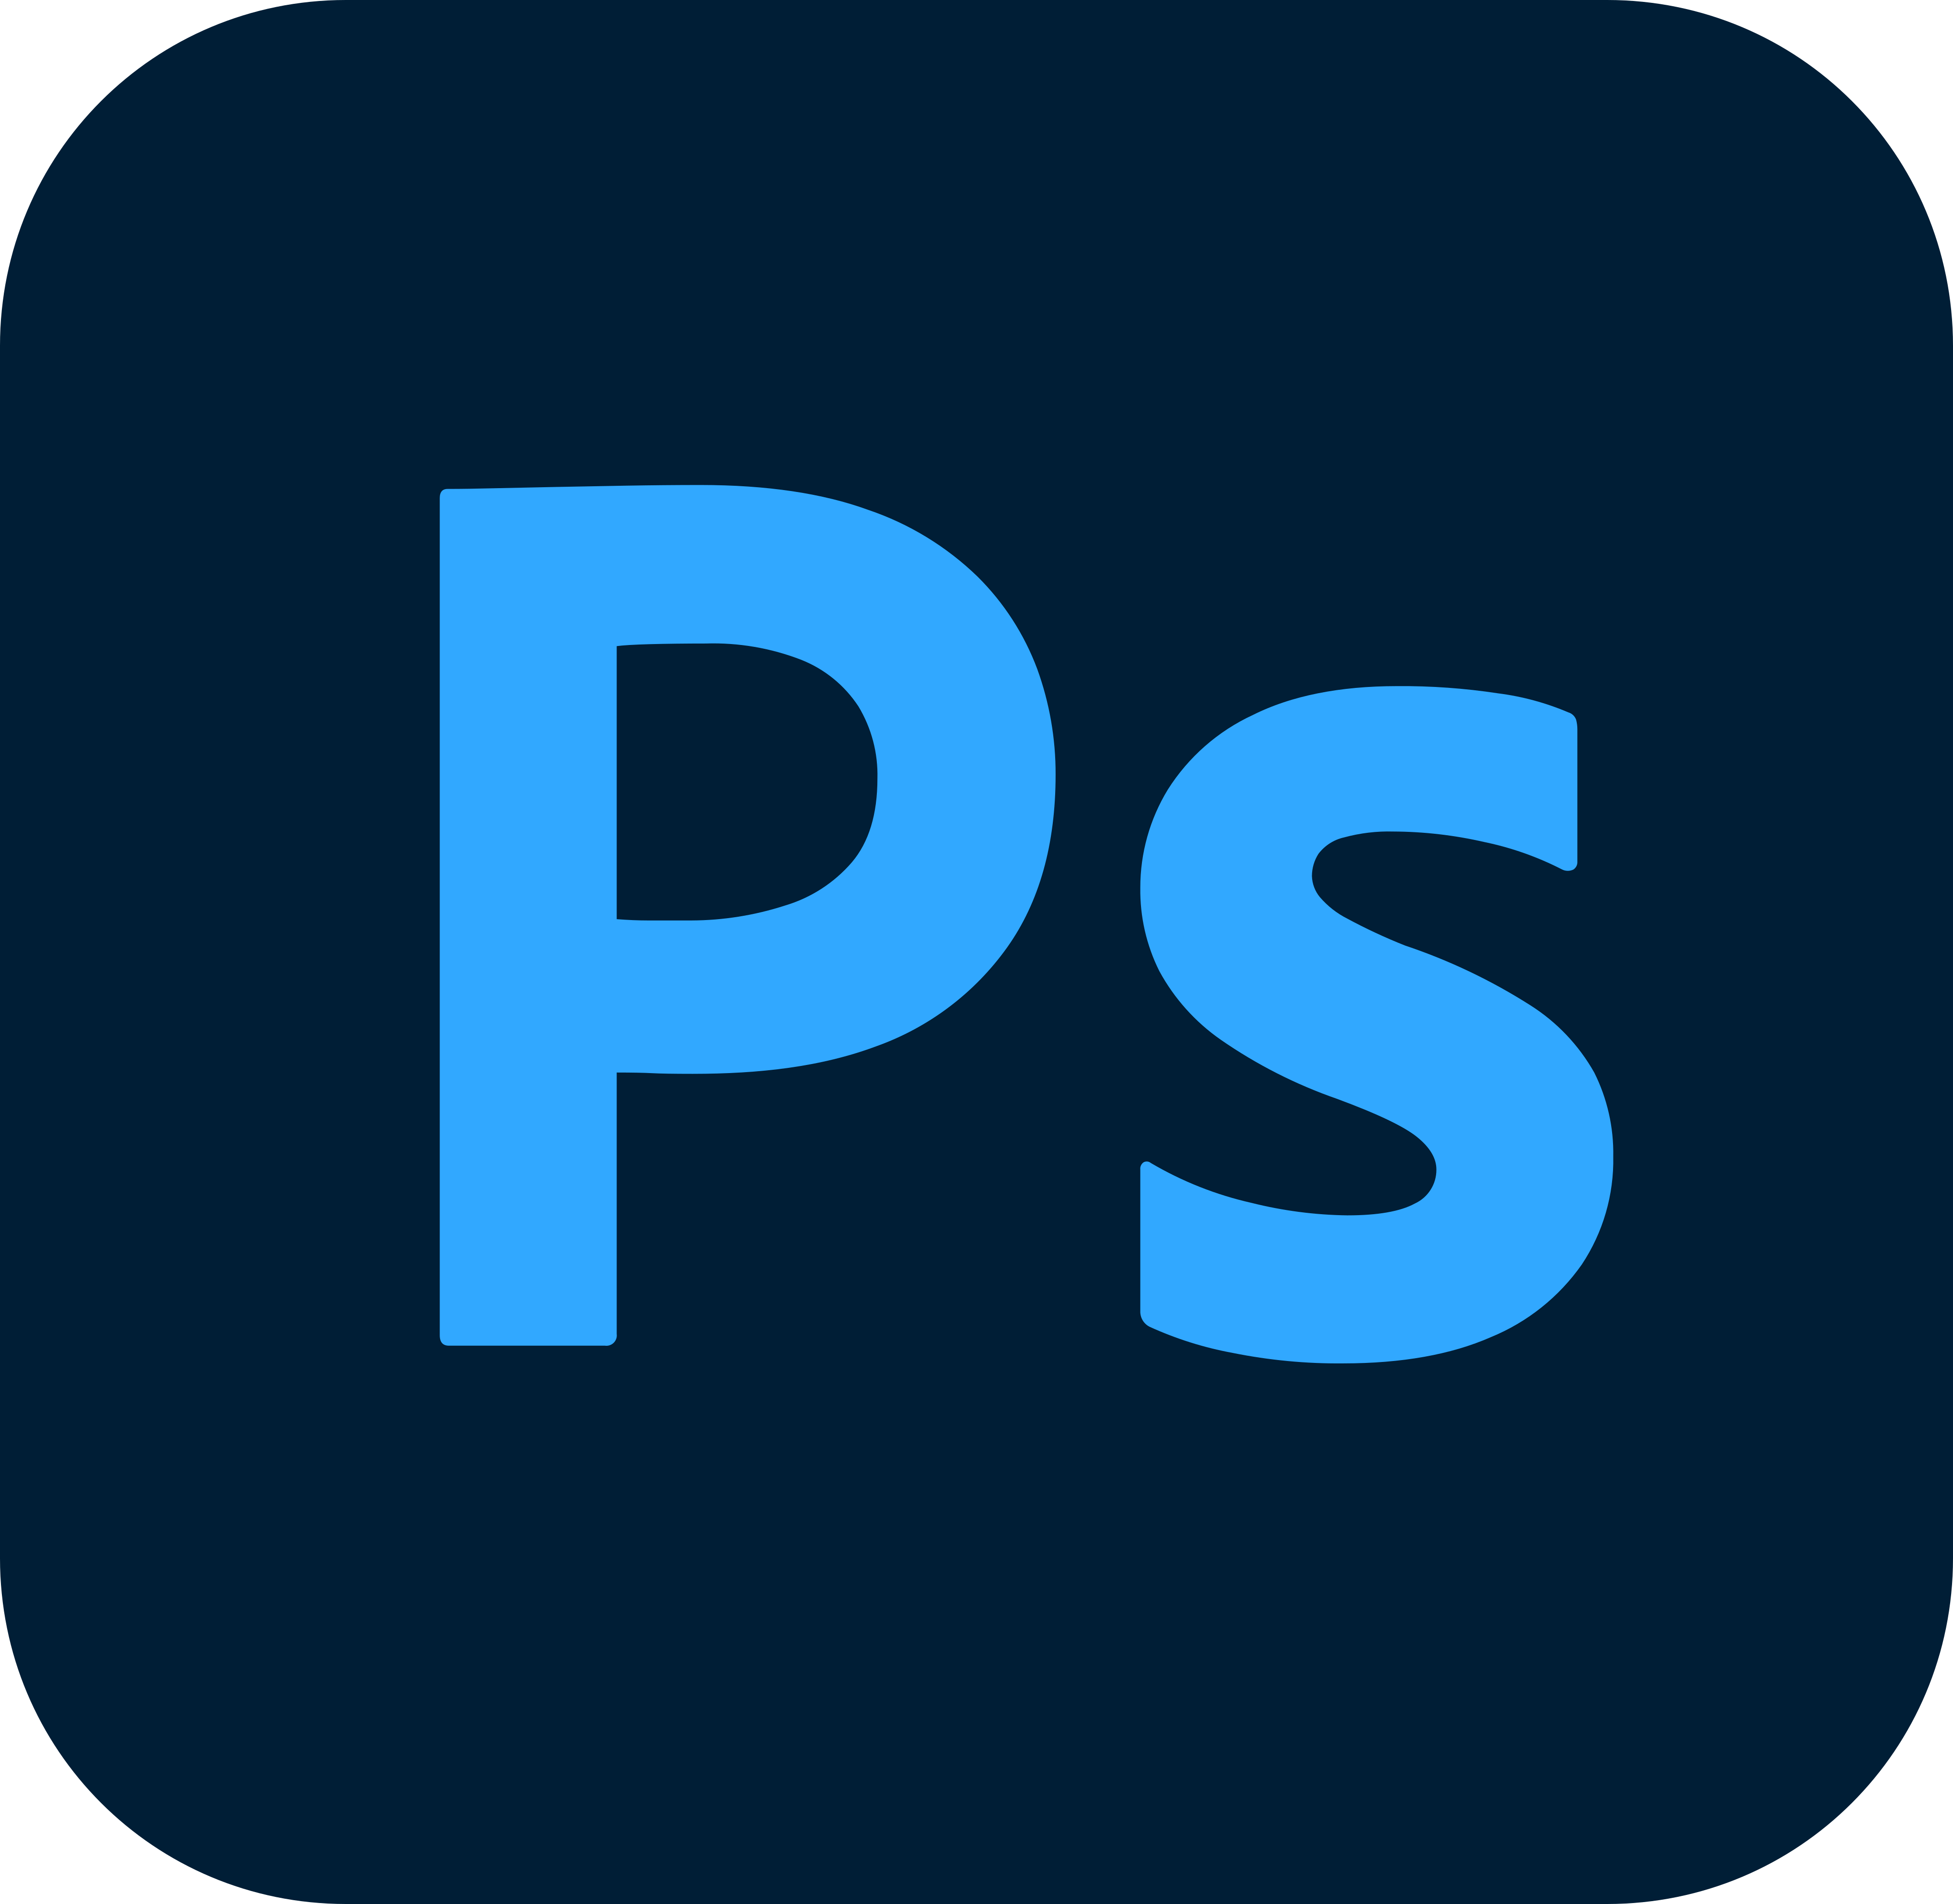 Ps Logo: Crafting a Visual Legacy